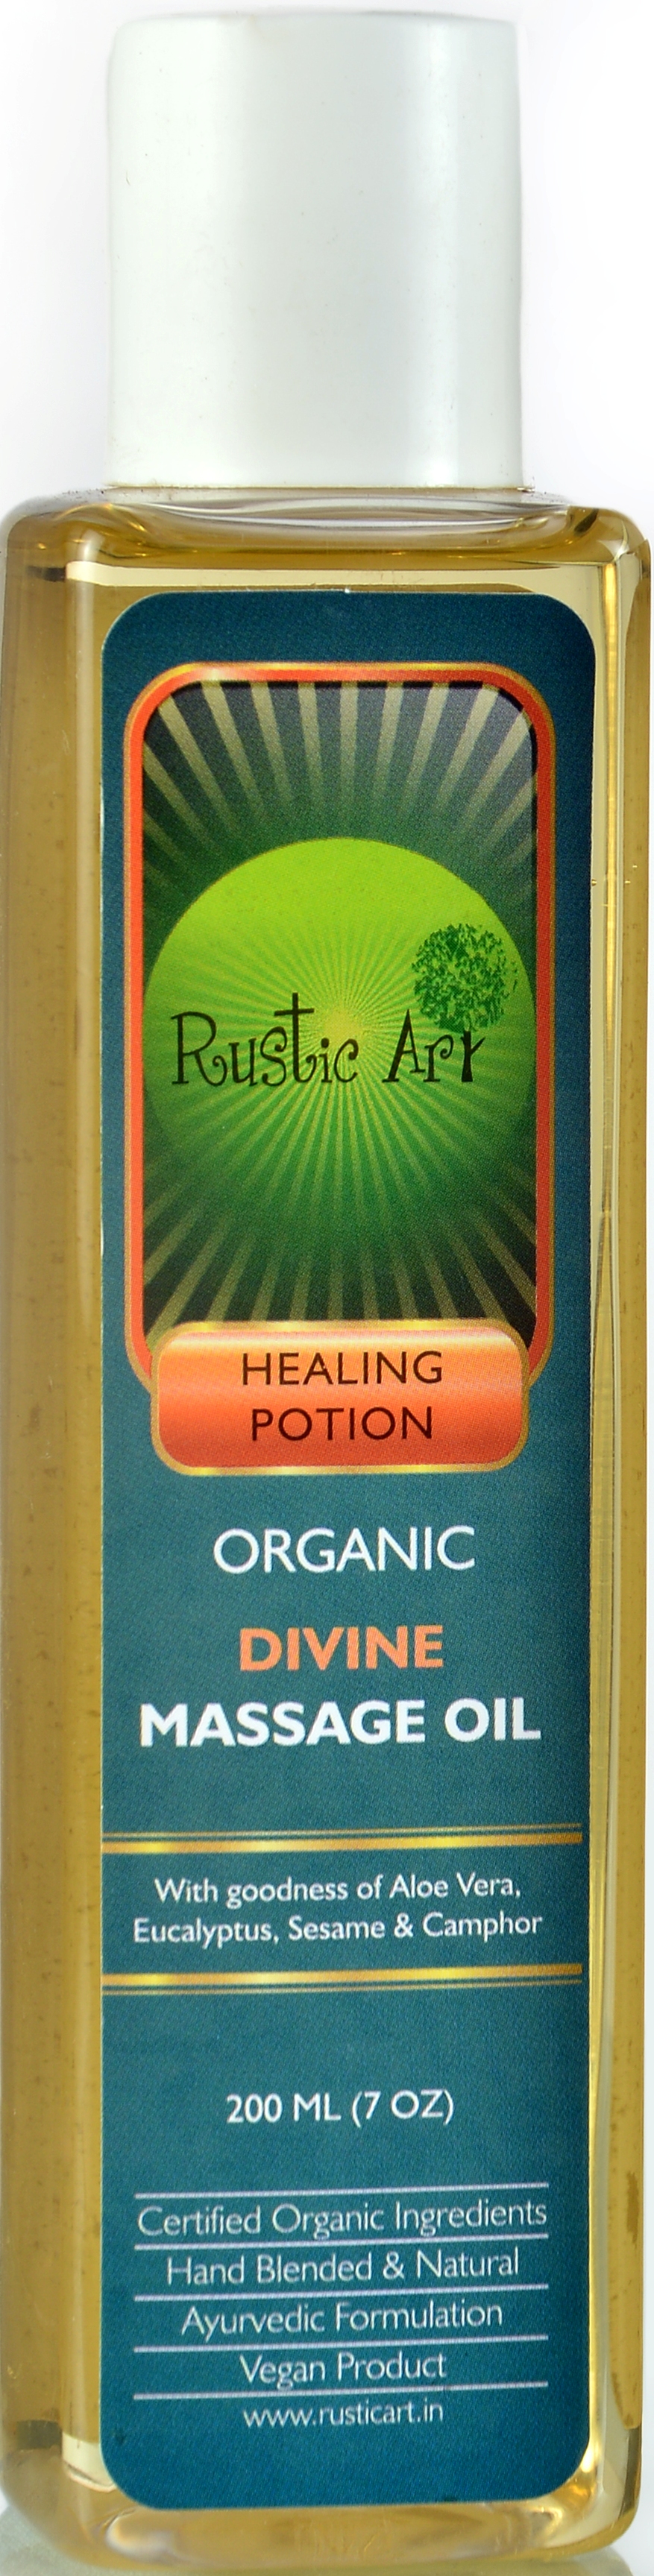 Rustic Art Organic Divine Massage Oil